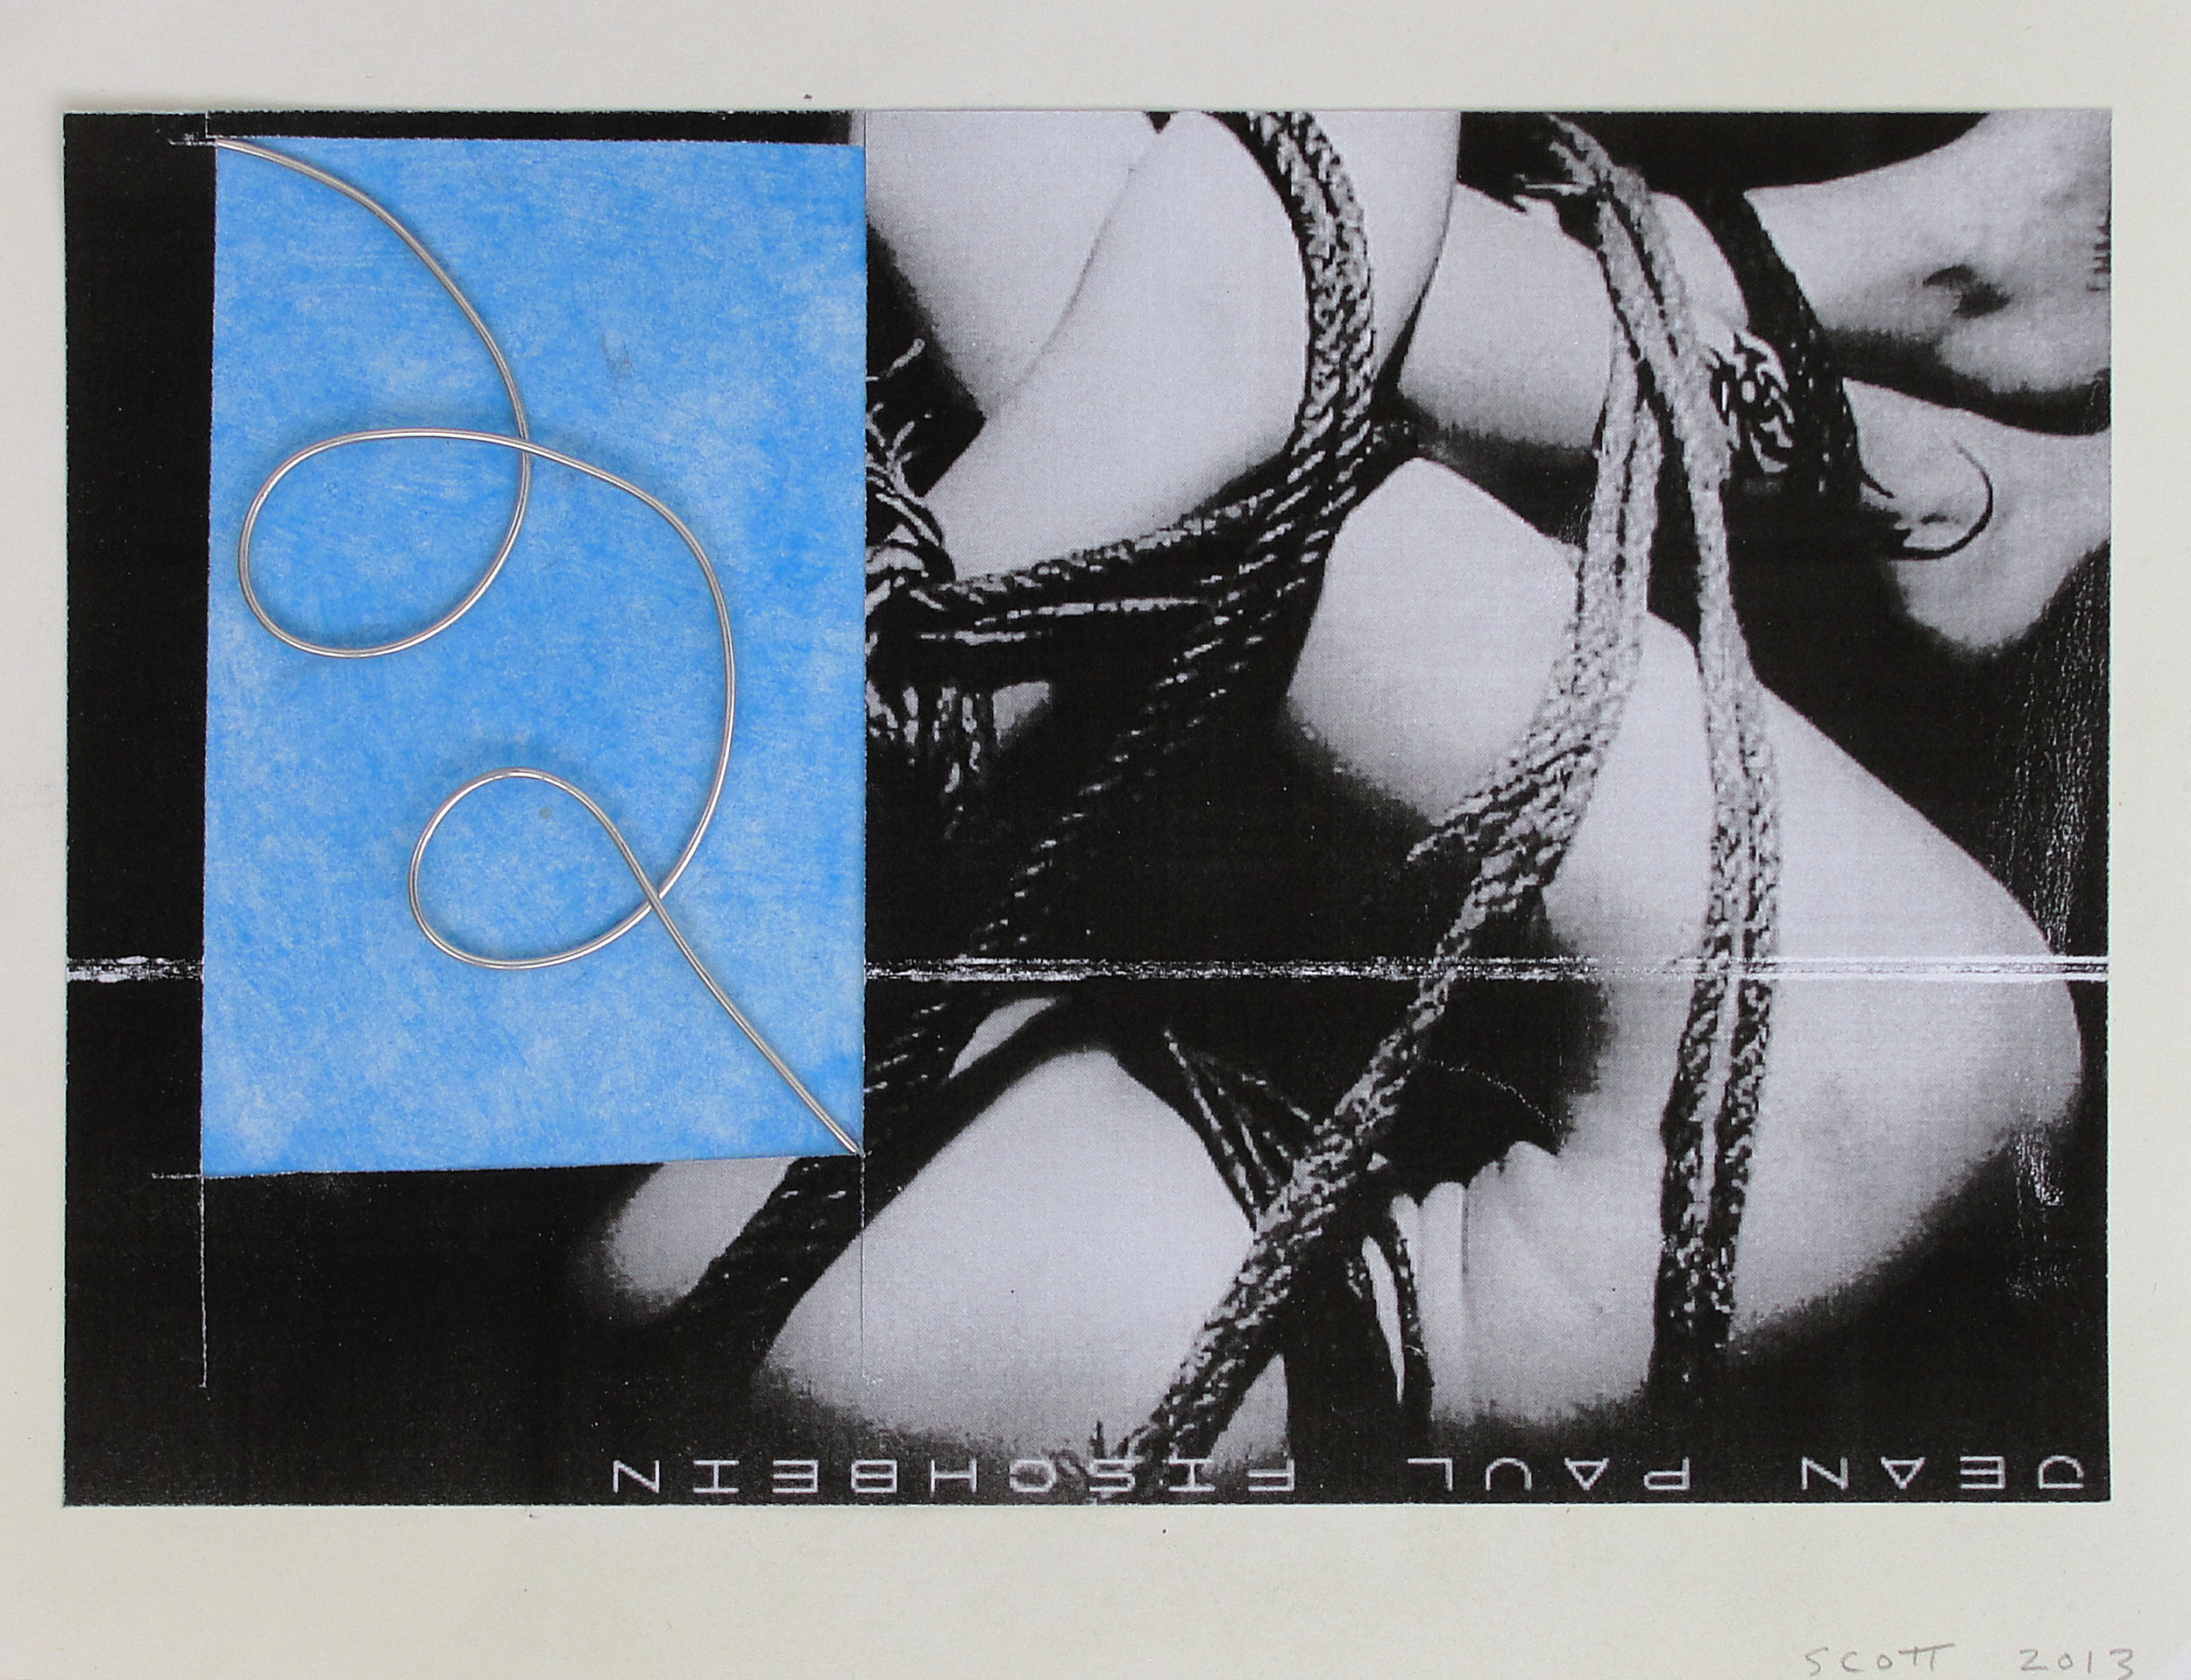   Slave of Love #2  (2013), 8.5 x 11 in, wire, xerox 